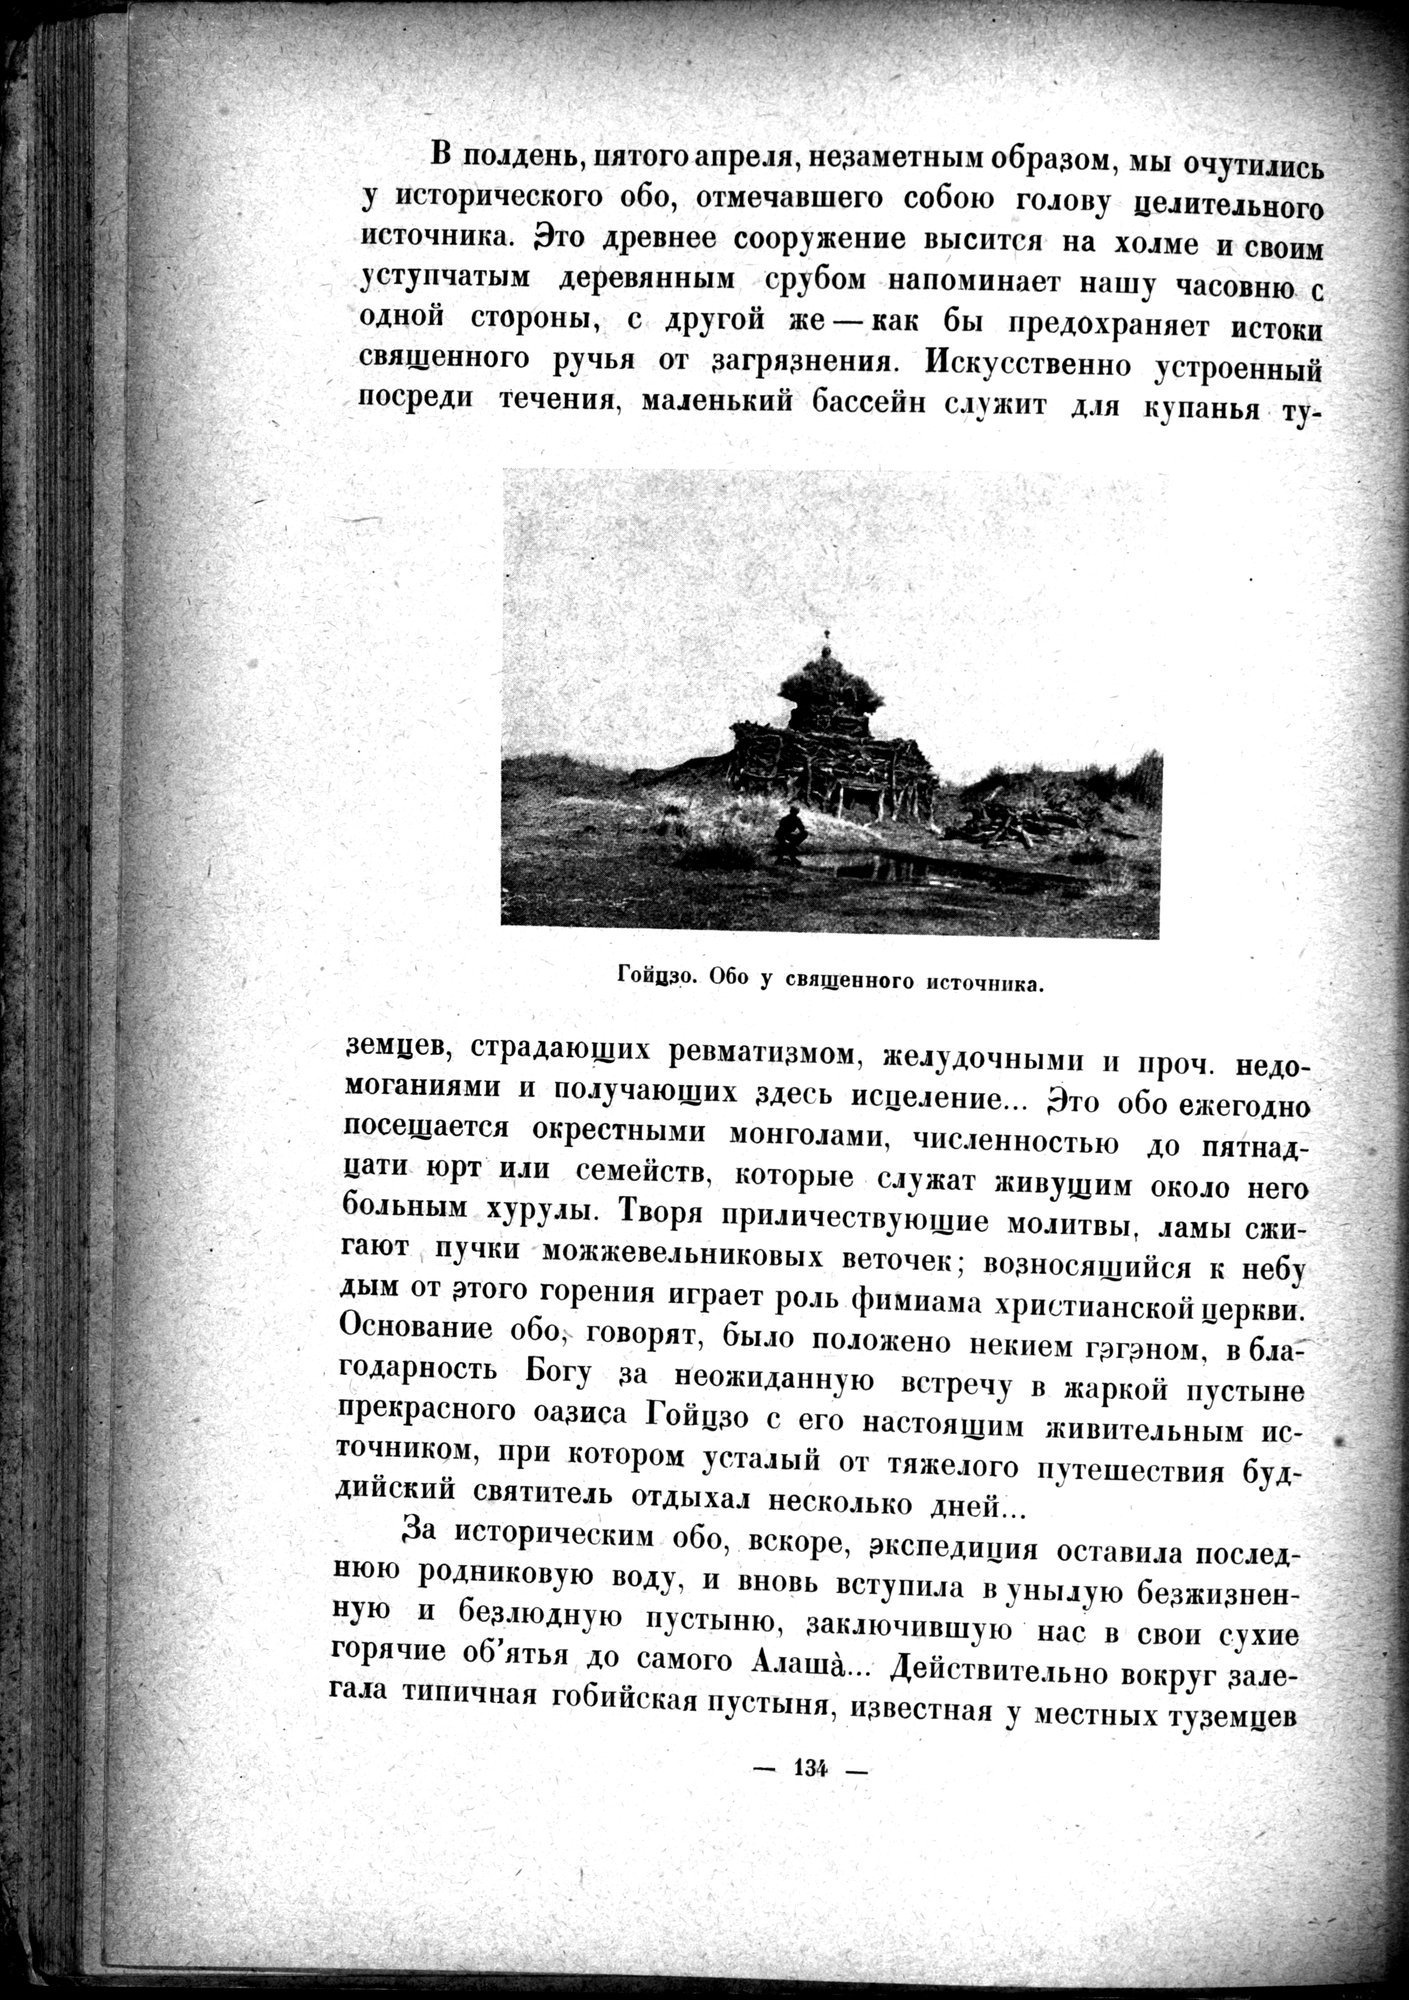 Mongoliya i Amdo i mertby gorod Khara-Khoto : vol.1 / Page 162 (Grayscale High Resolution Image)